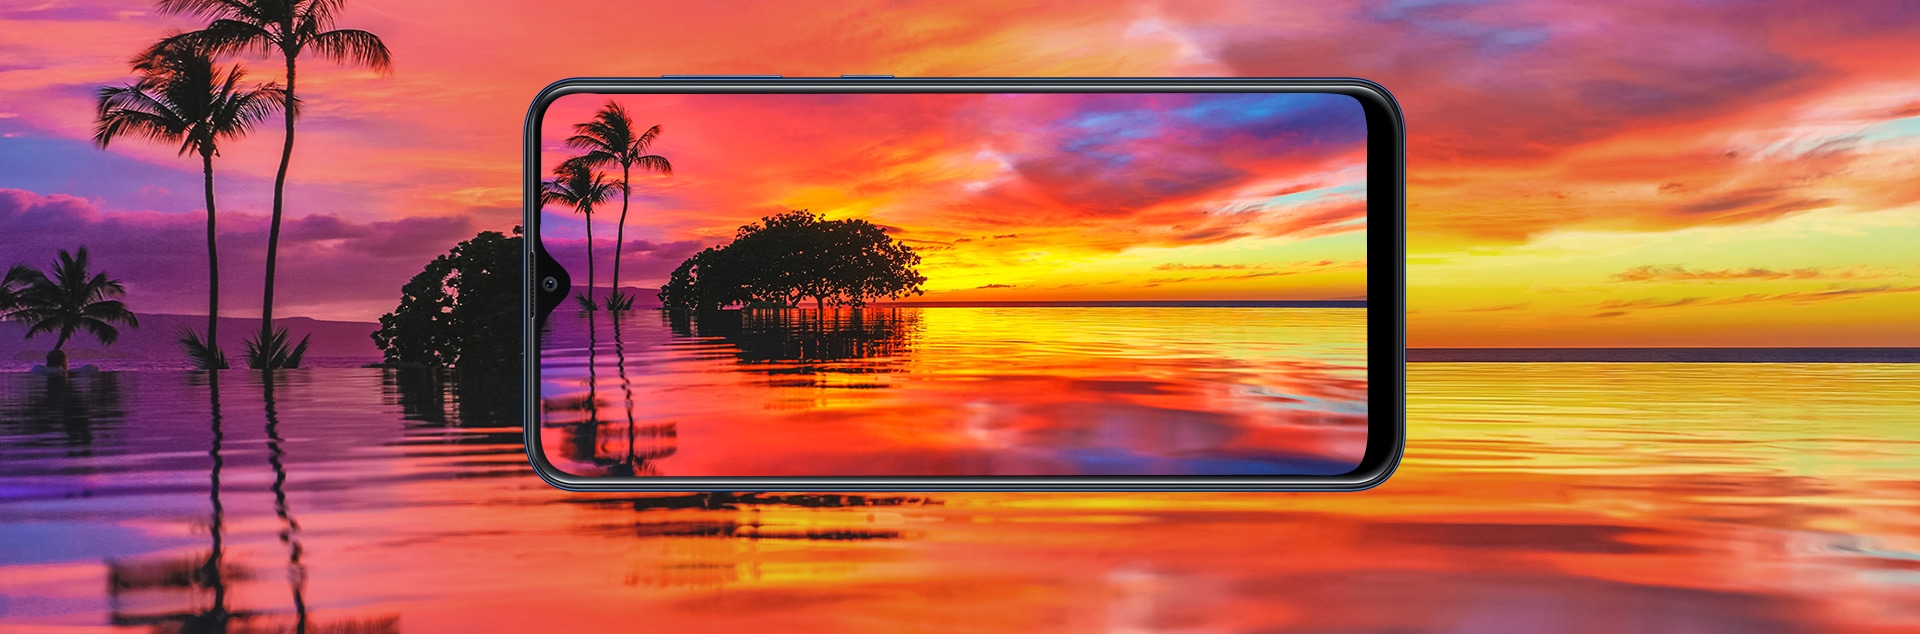 Samsung Galaxy A20 sAMOLED 6.4 inch Infinity-V Display